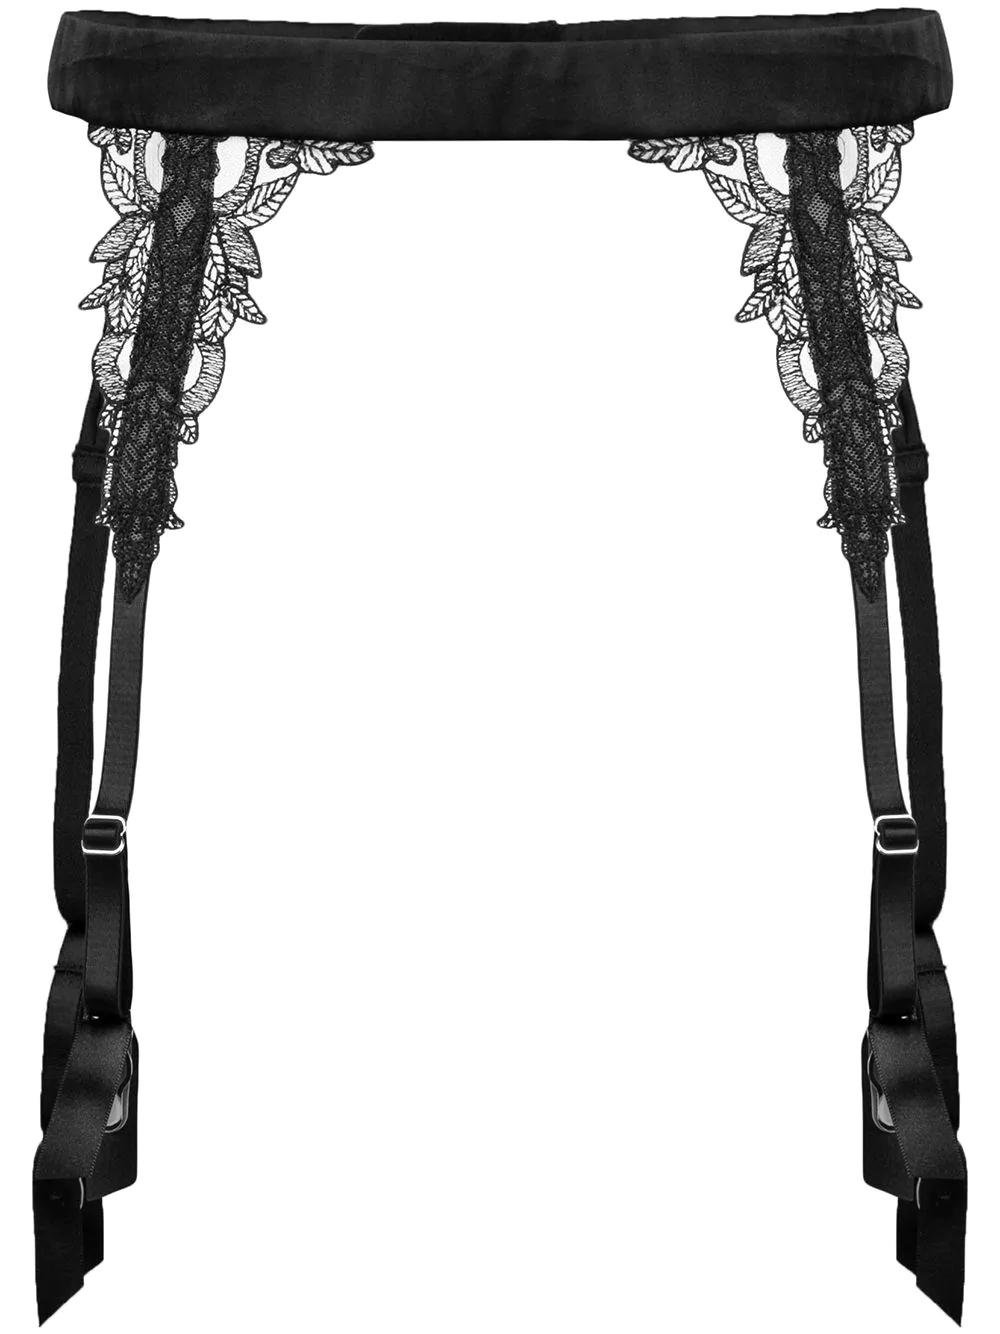 Onyx suspenders by FLEUR OF ENGLAND